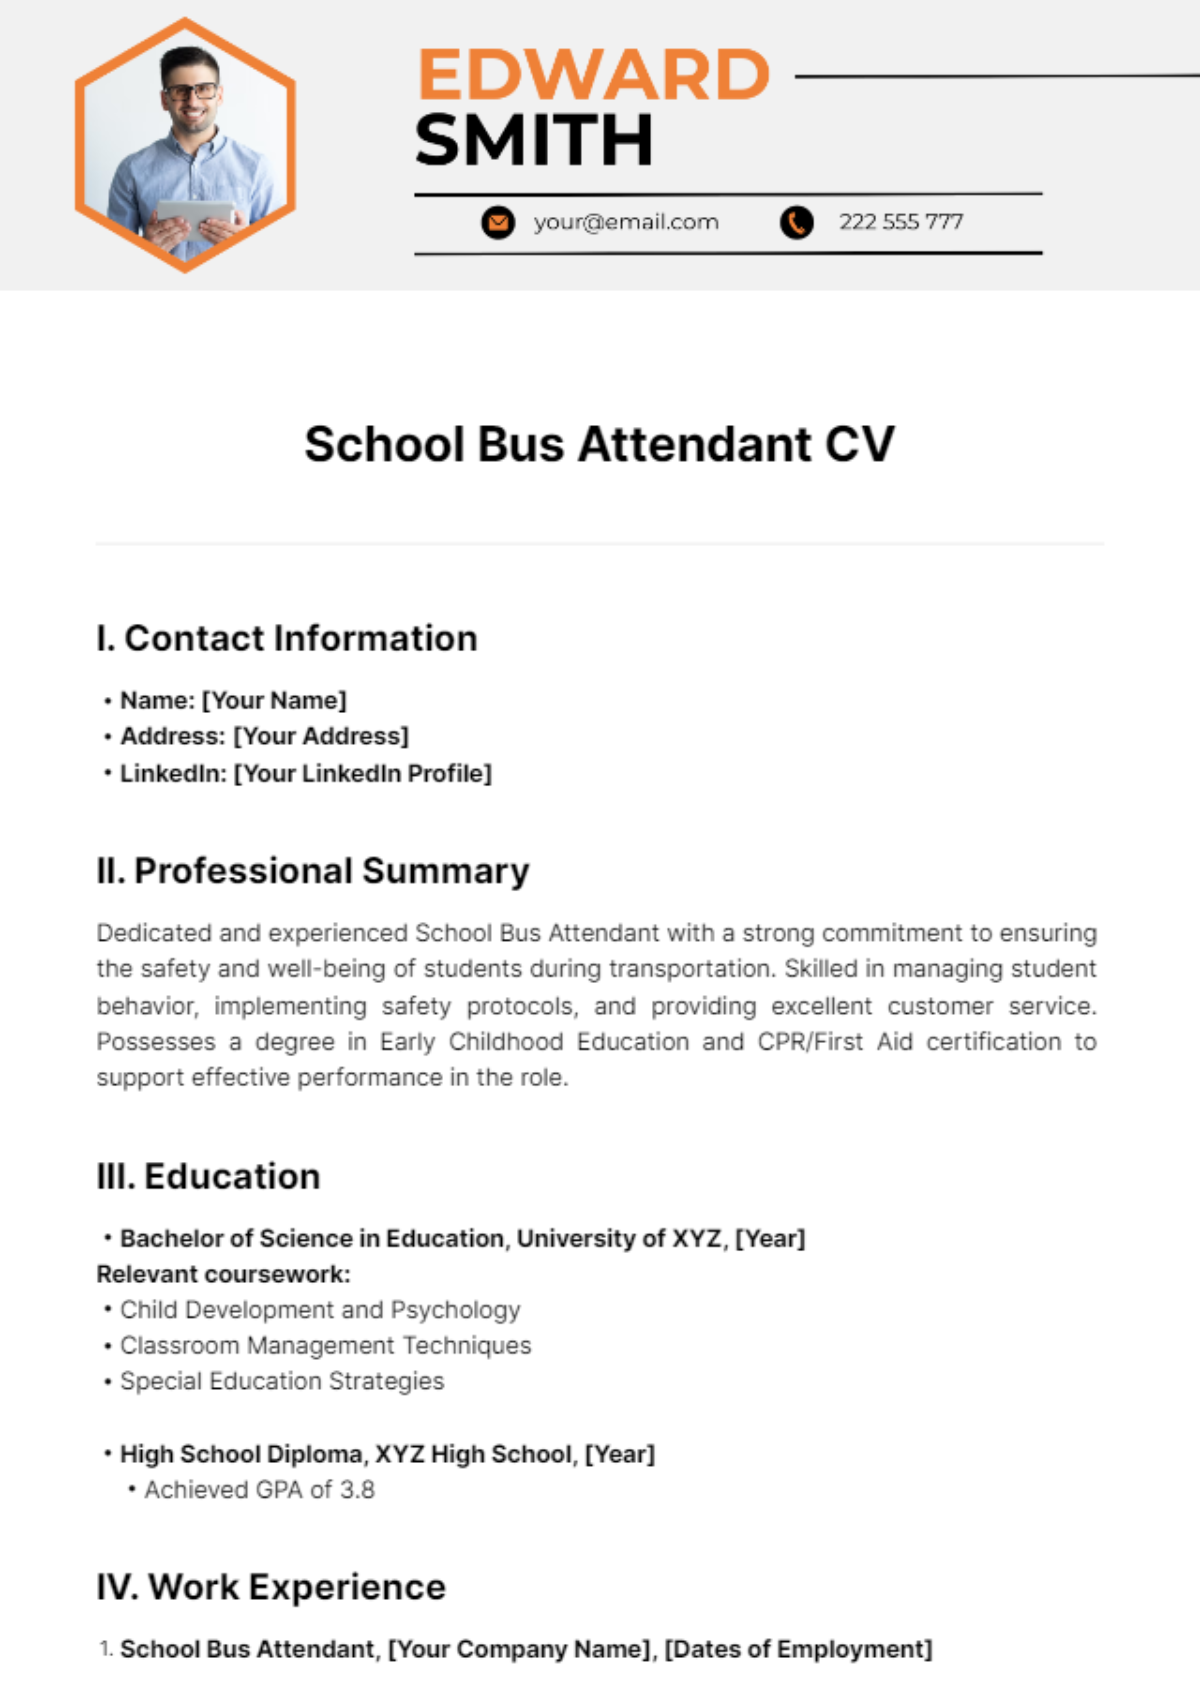 School Bus Attendant CV Template